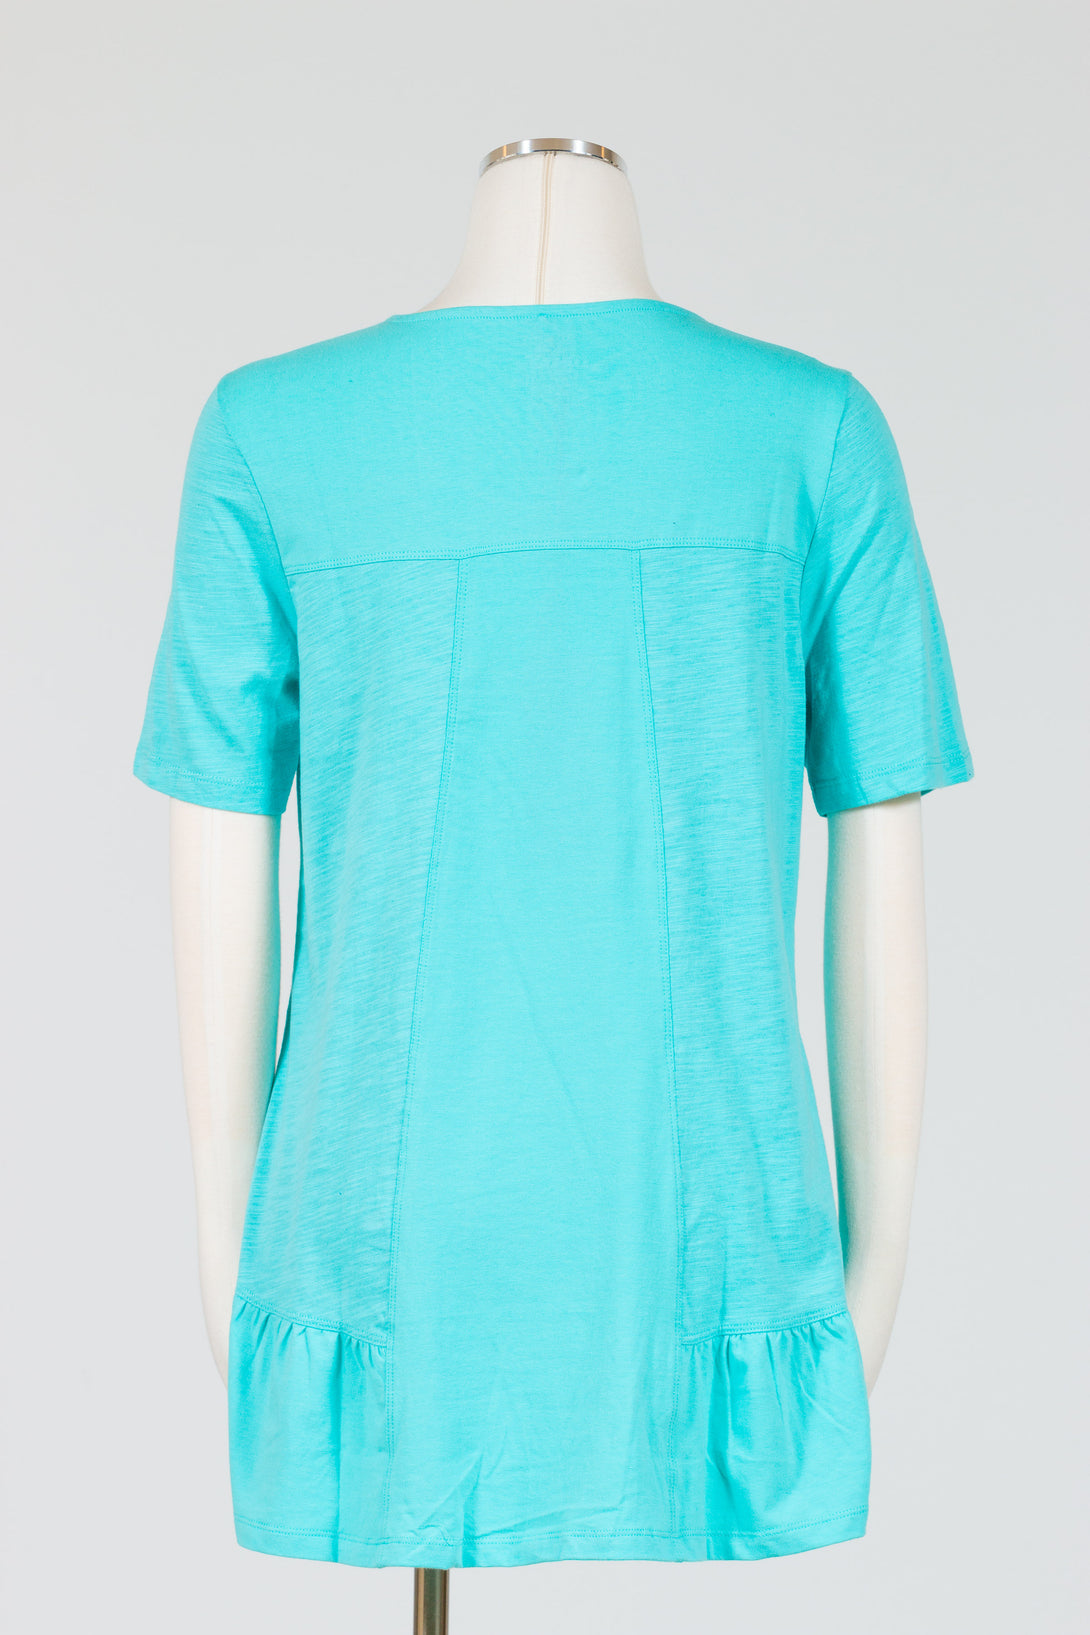 Neon Buddha Summertime Top (Cotton Knit) {Blush/Ocean}